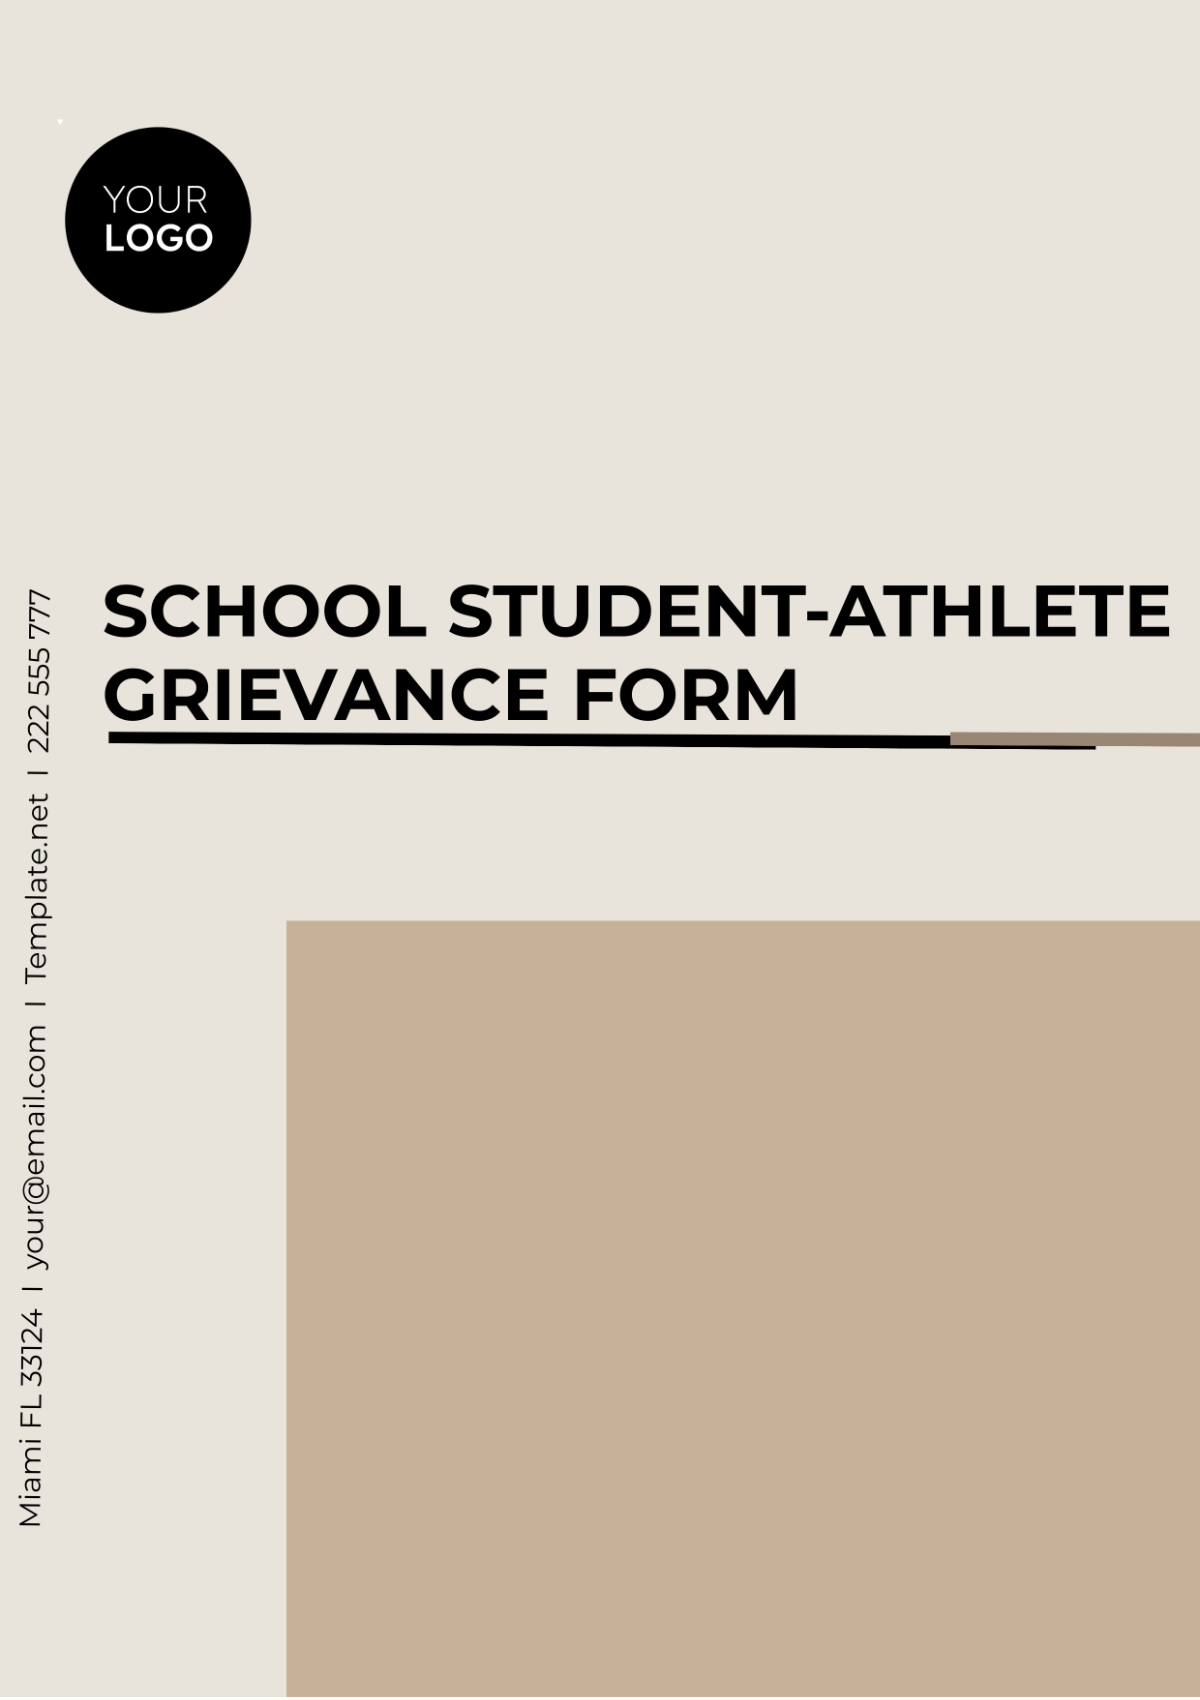 School Student-Athlete Grievance Form Template